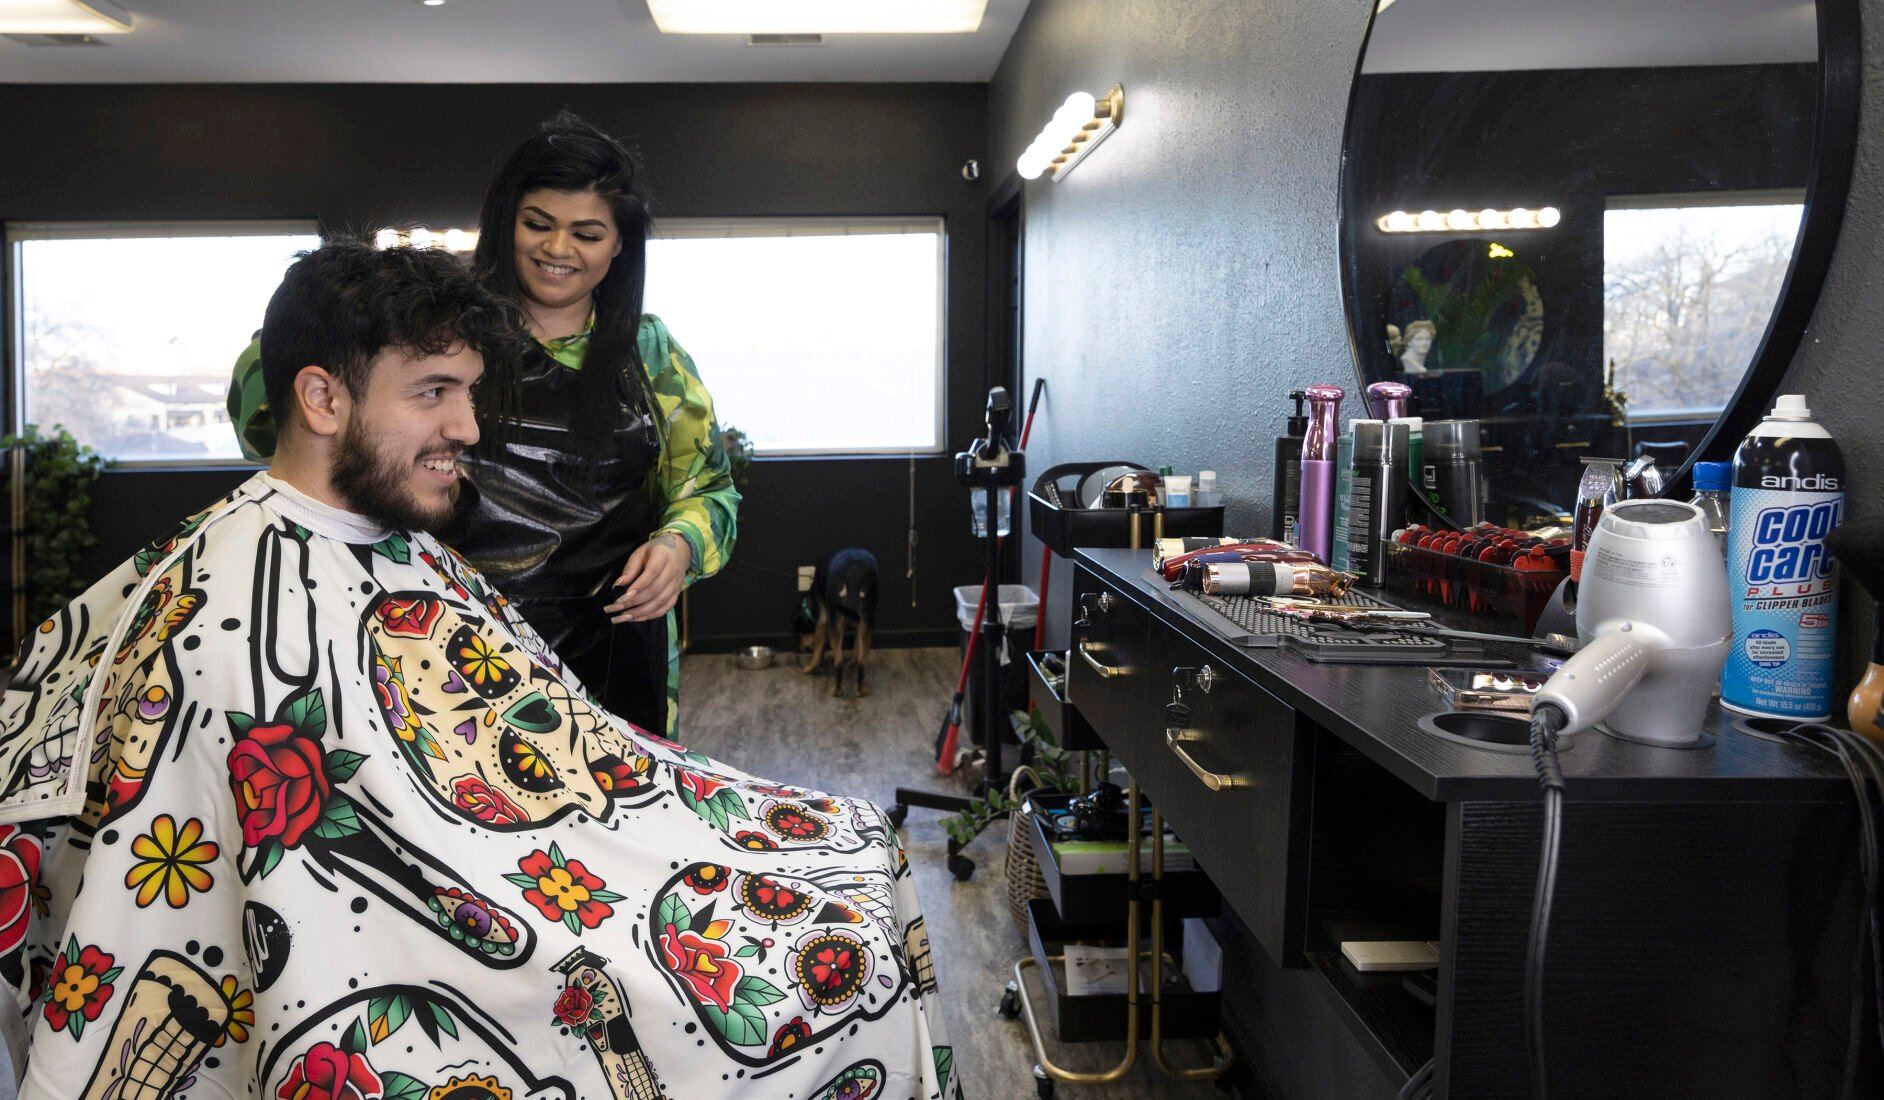 King Kutz owner Ana Neuhaus cuts Jose Cardenas’ hair at the barbershop on Center Grove Drive in Dubuque.    PHOTO CREDIT: Stephen Gassman
Telegraph Herald